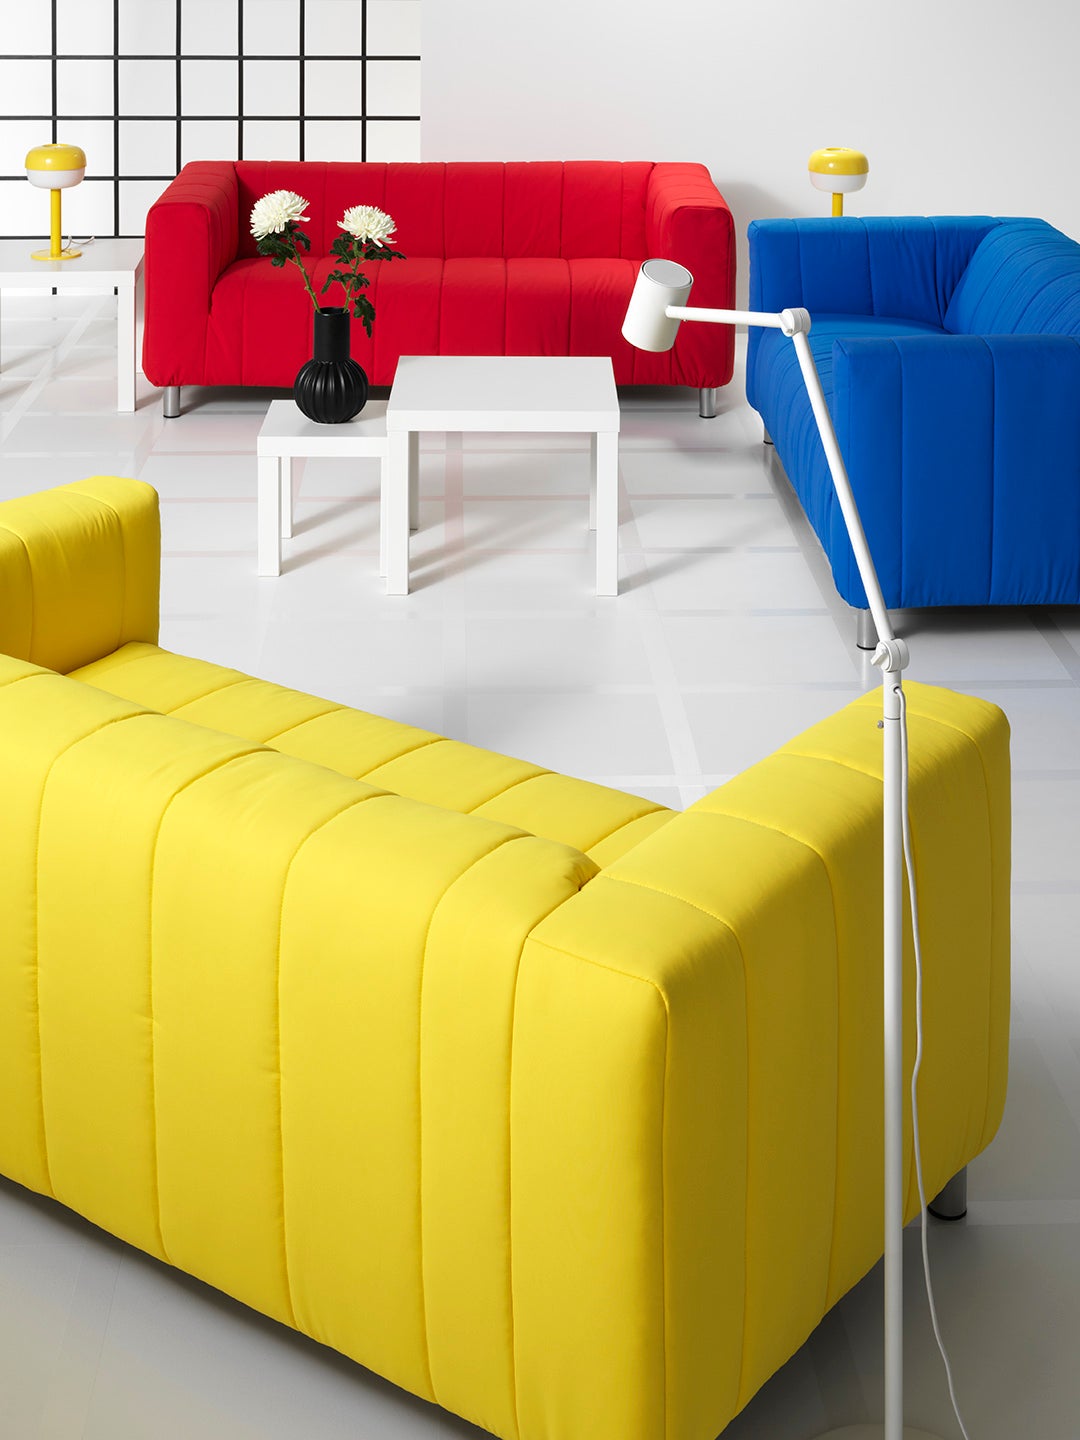 IKEA Klippan sofa in yellow, red, and blue